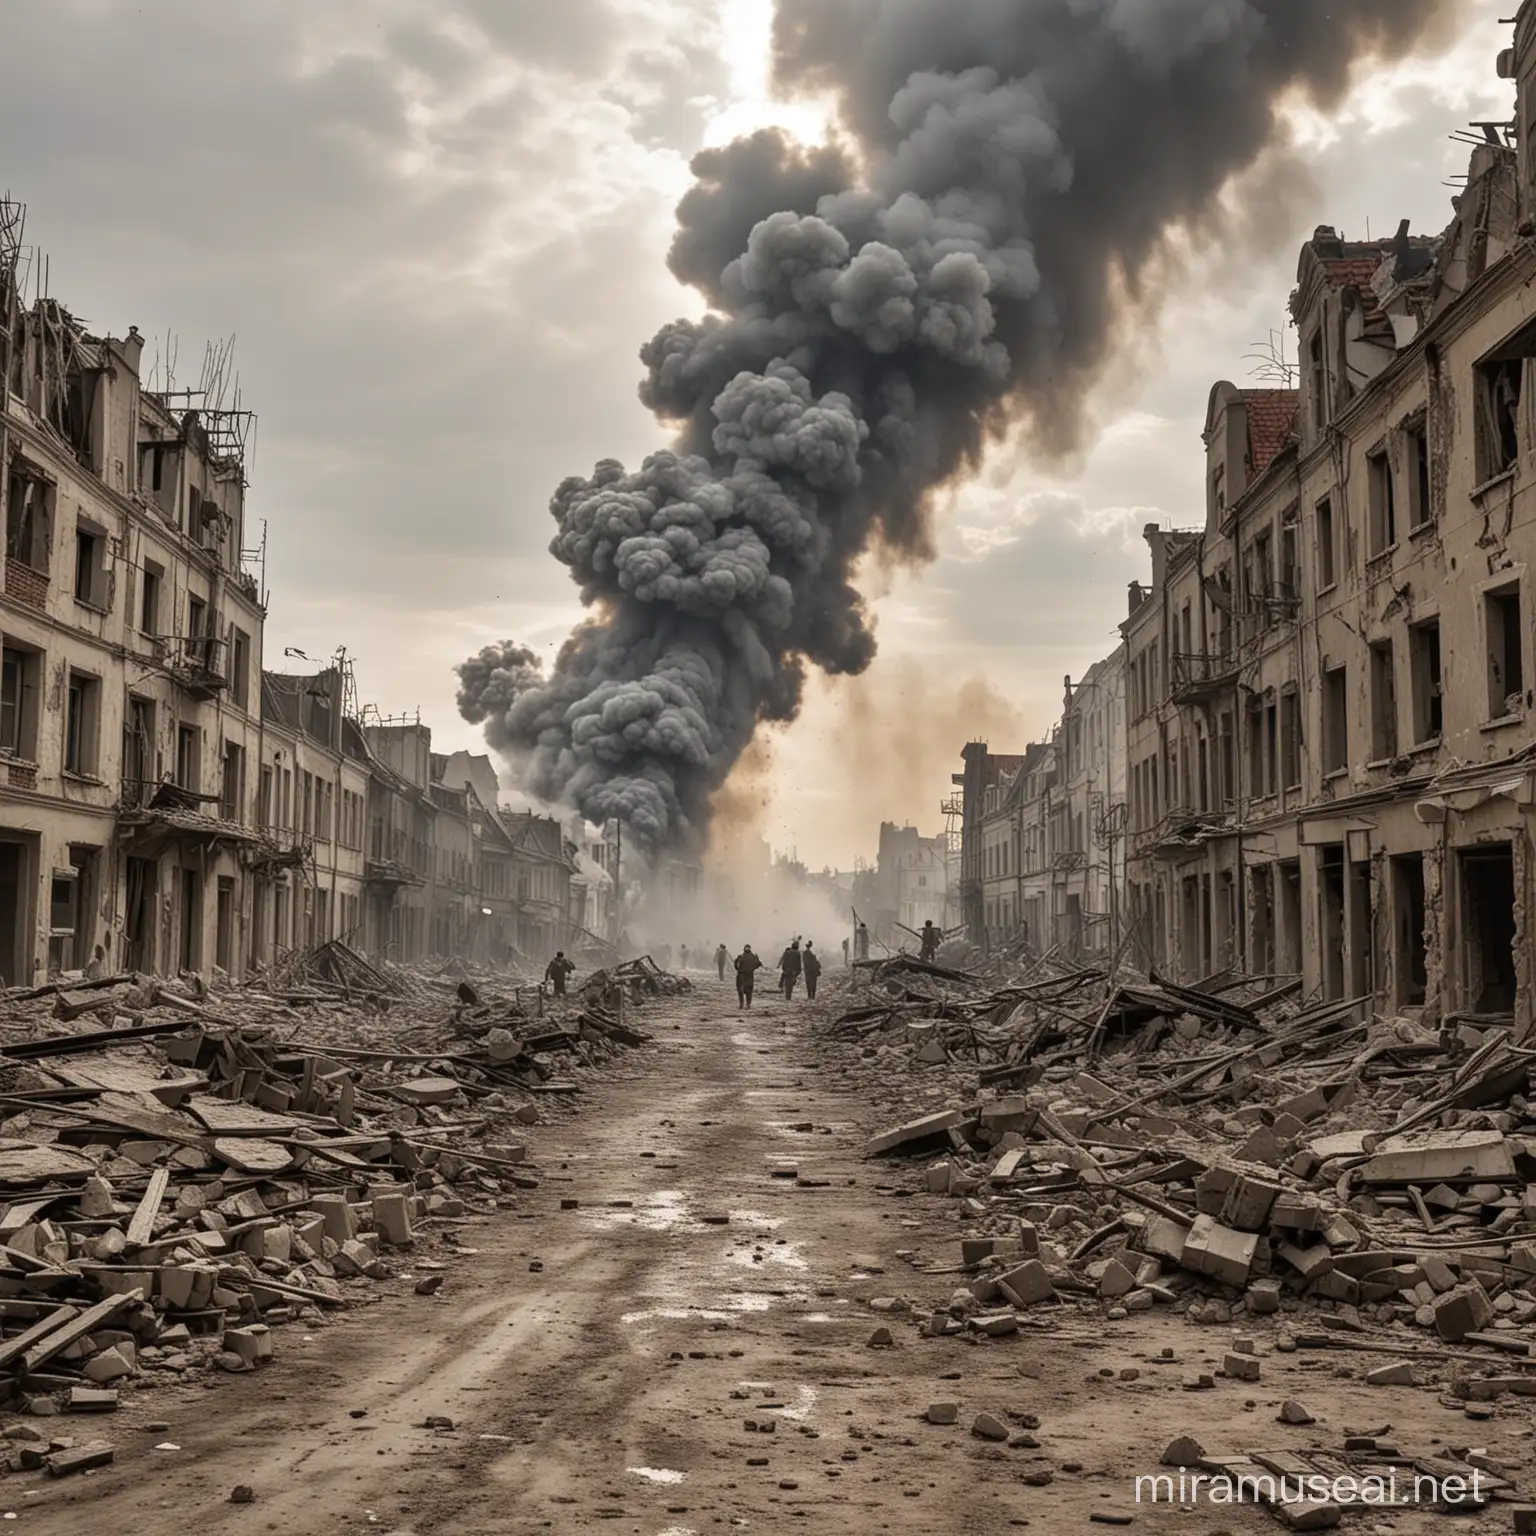 War scene, war torn, destroyed buildings, white phosphorus bombs, propaganda, poland ww2.